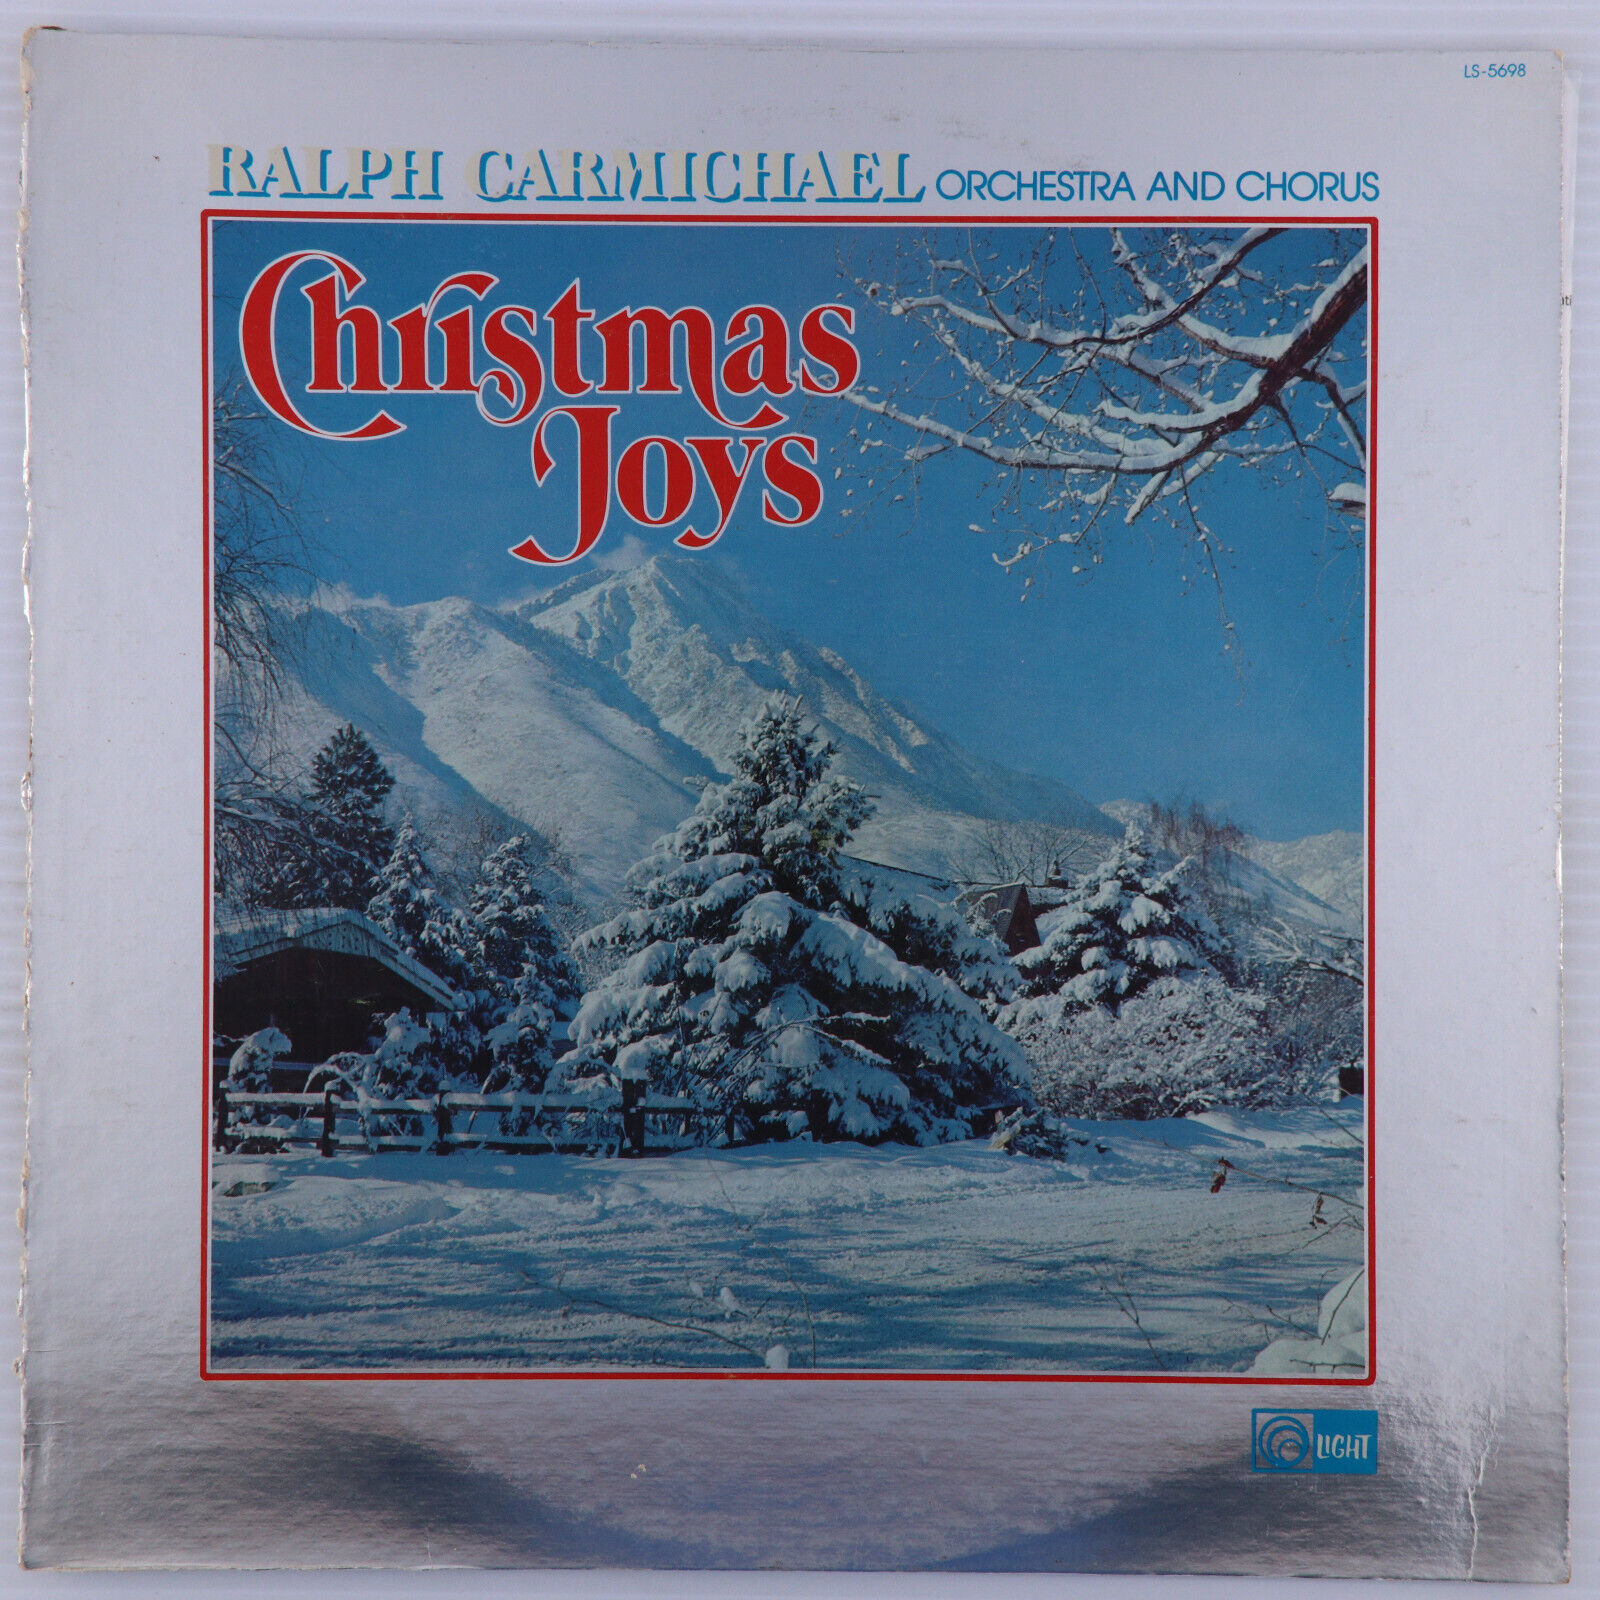 Ralph Carmichael Orchestra & Chorus – Christmas Joys - 1976 Stereo LP LS-5698